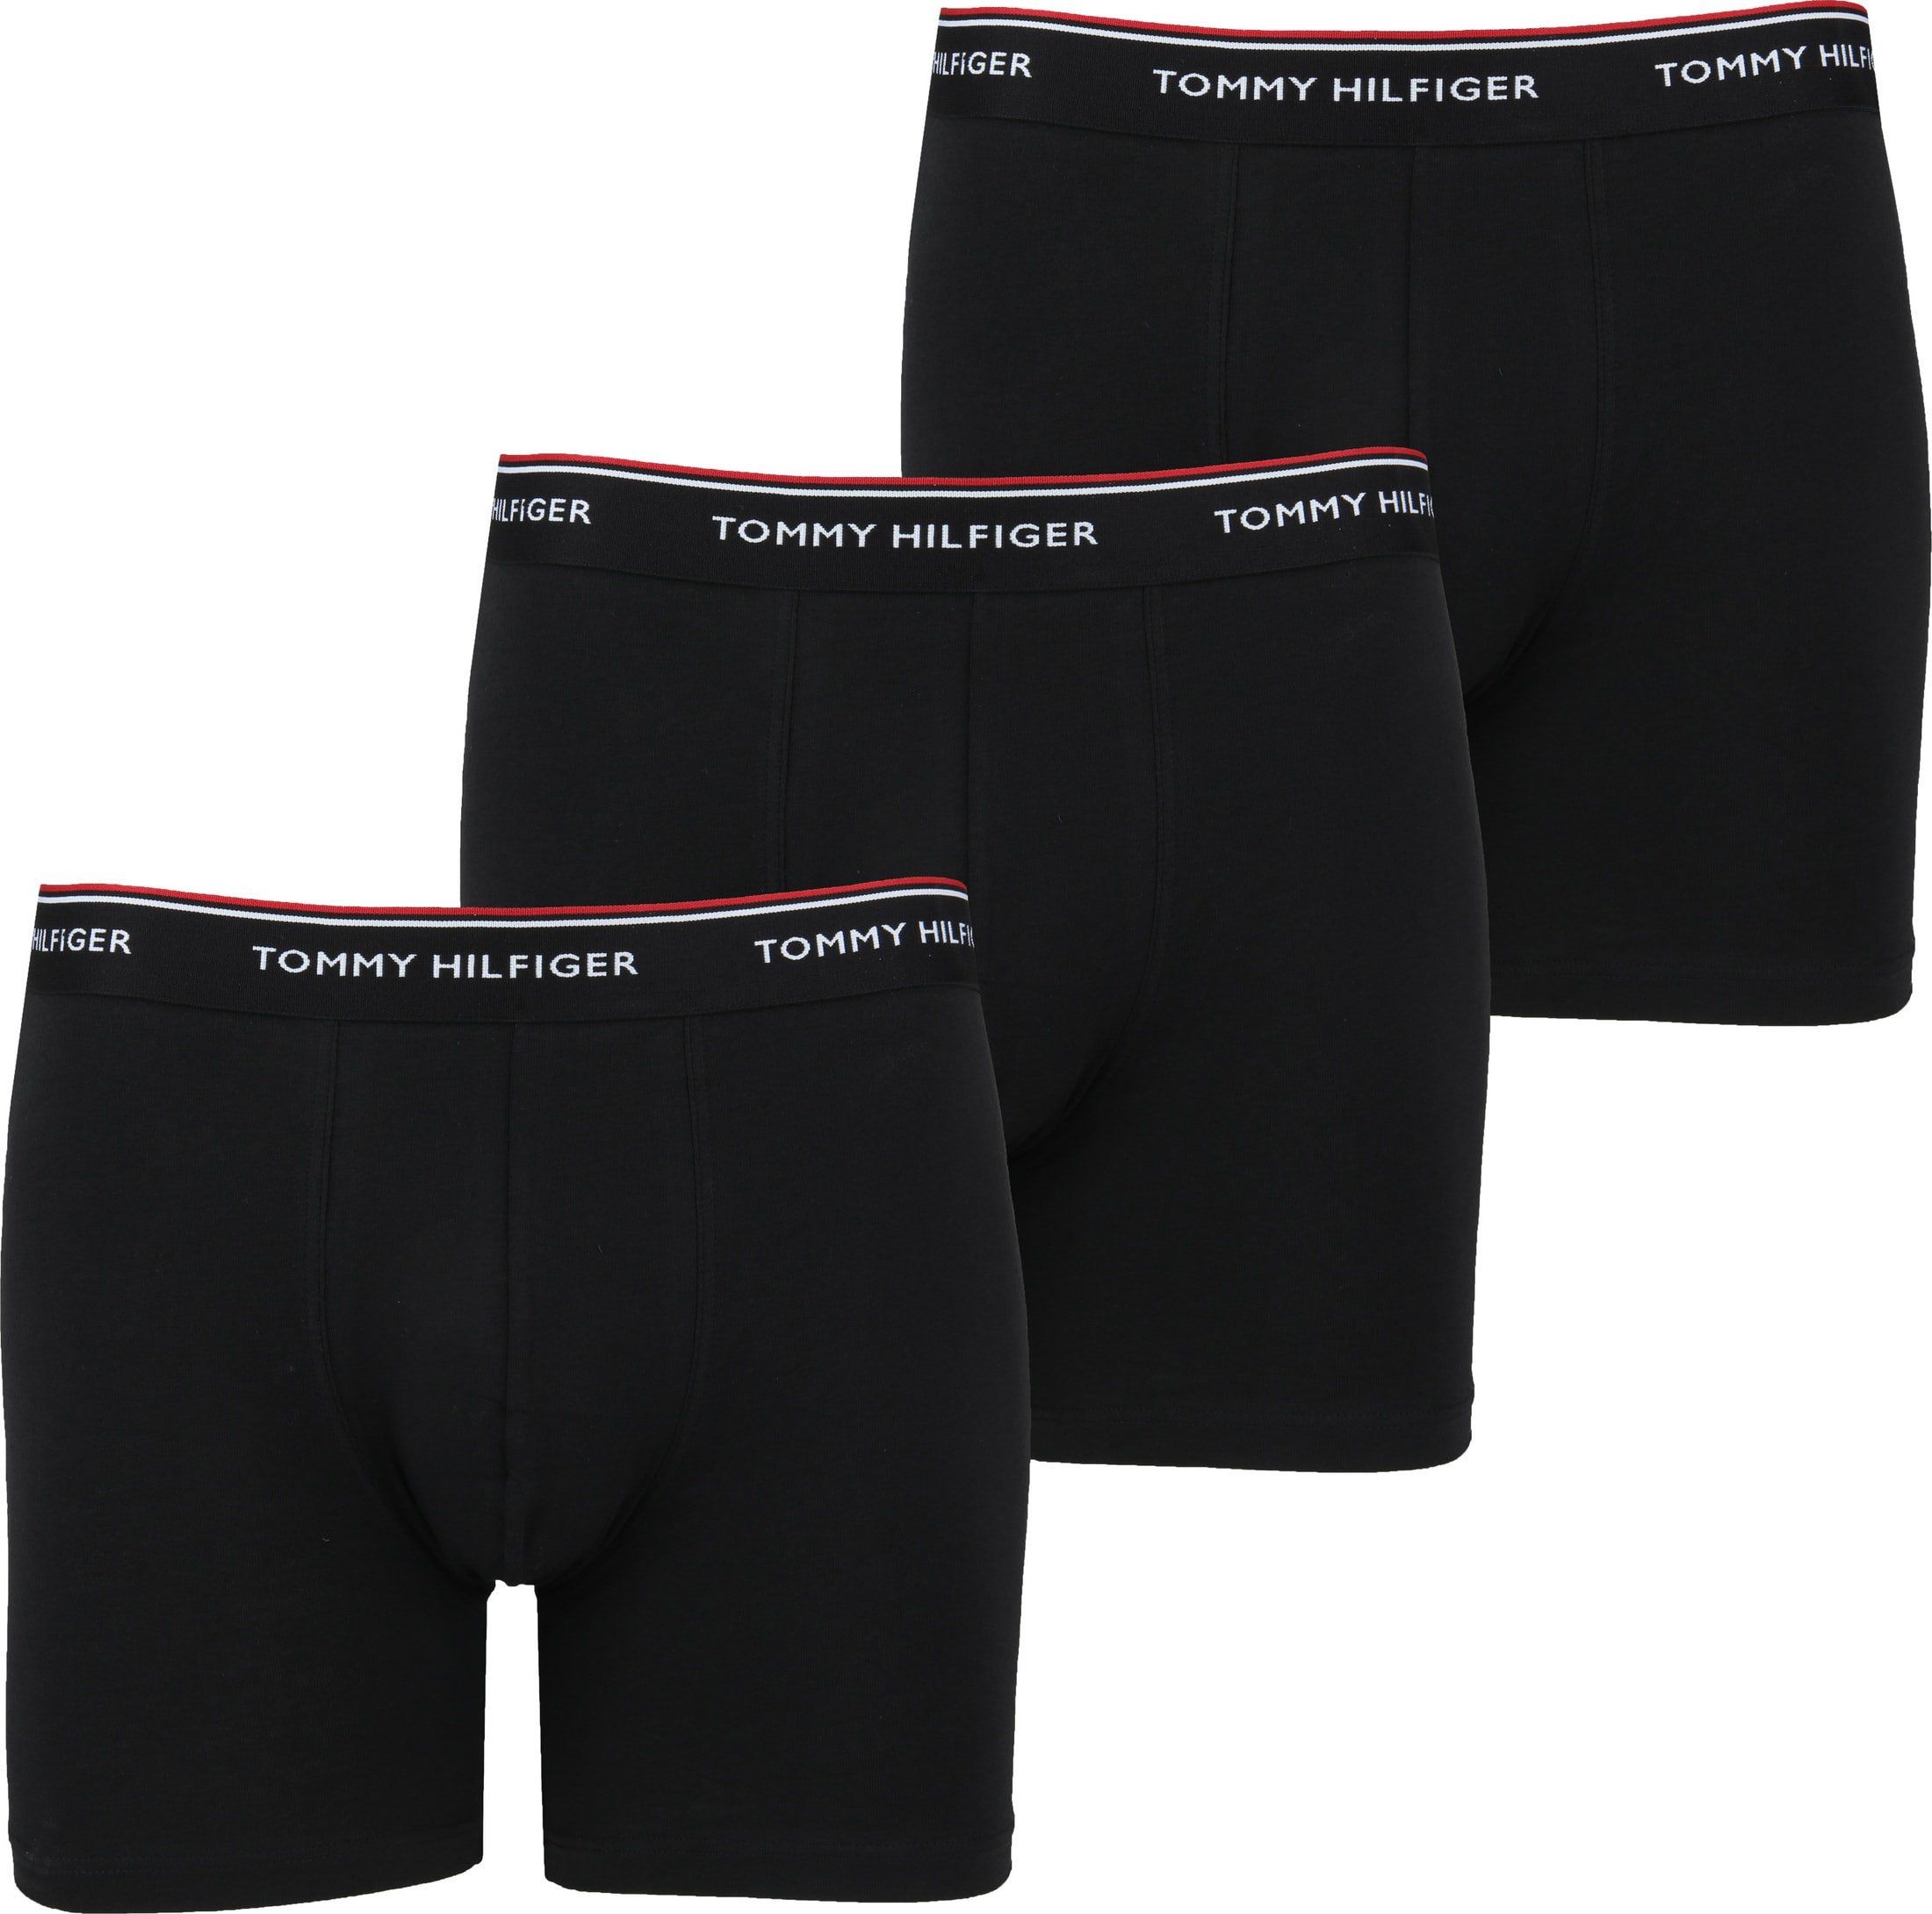 Tommy Hilfiger Boxer Shorts 3-Pack Brief Black size M